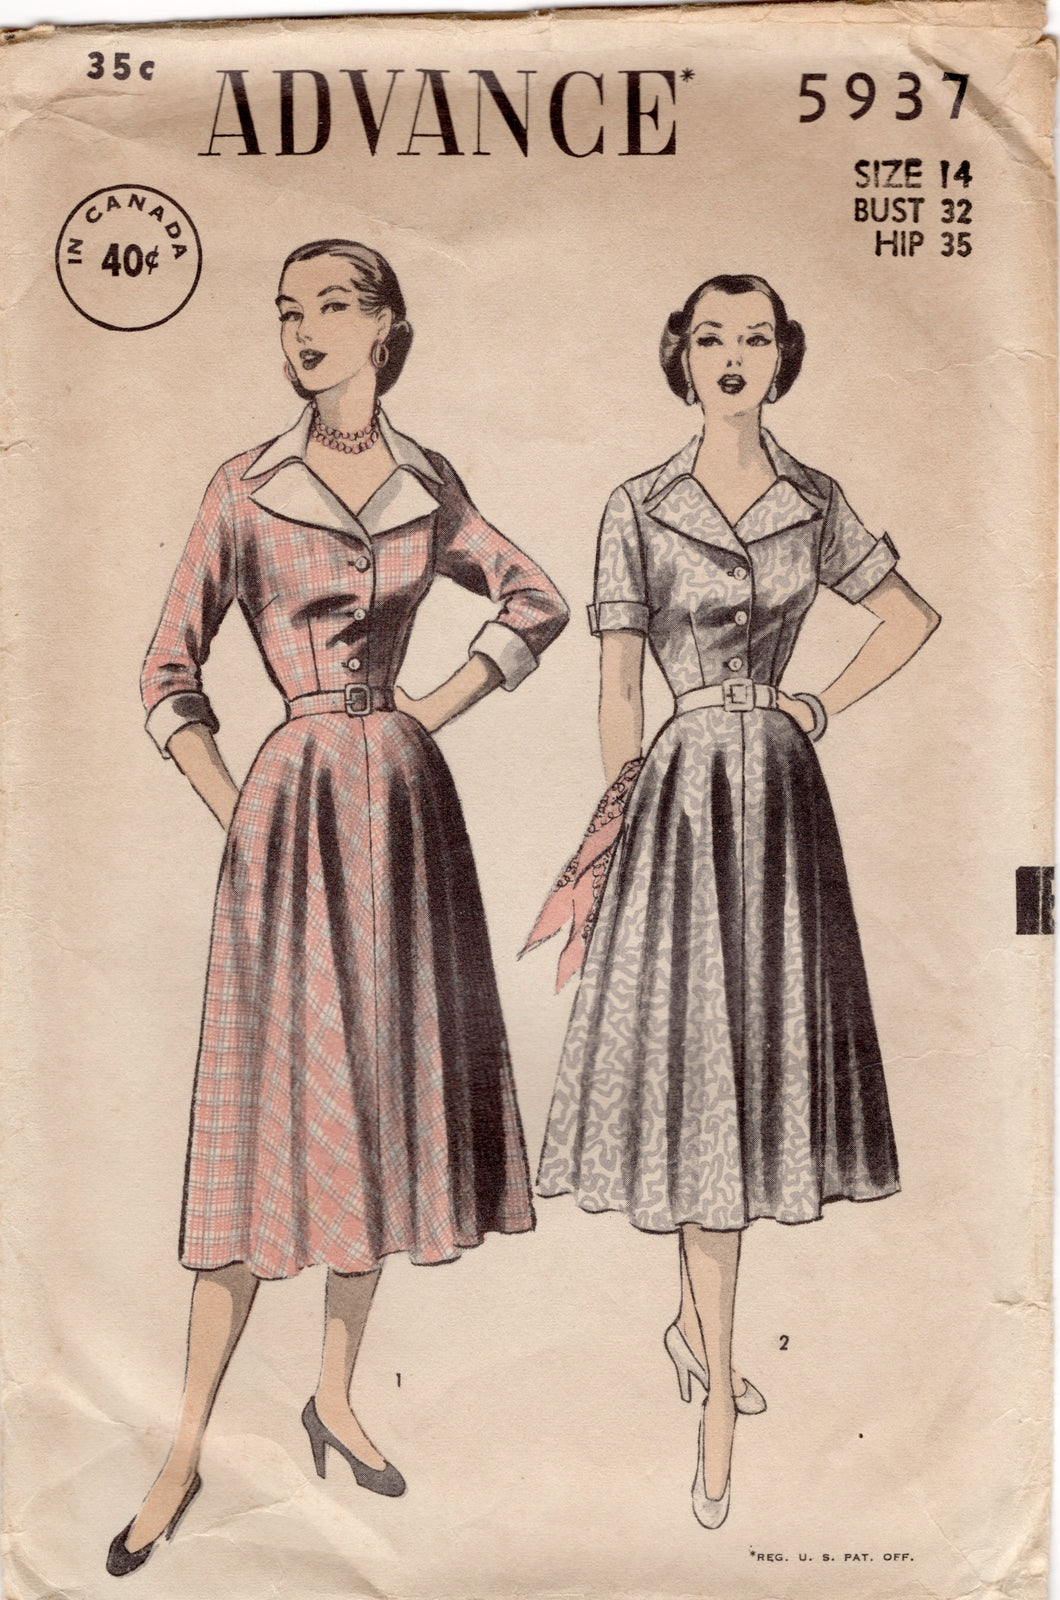 1950's Advance Shirtwaist Dress with Large Collar and Cuffs Pattern - Bust 32